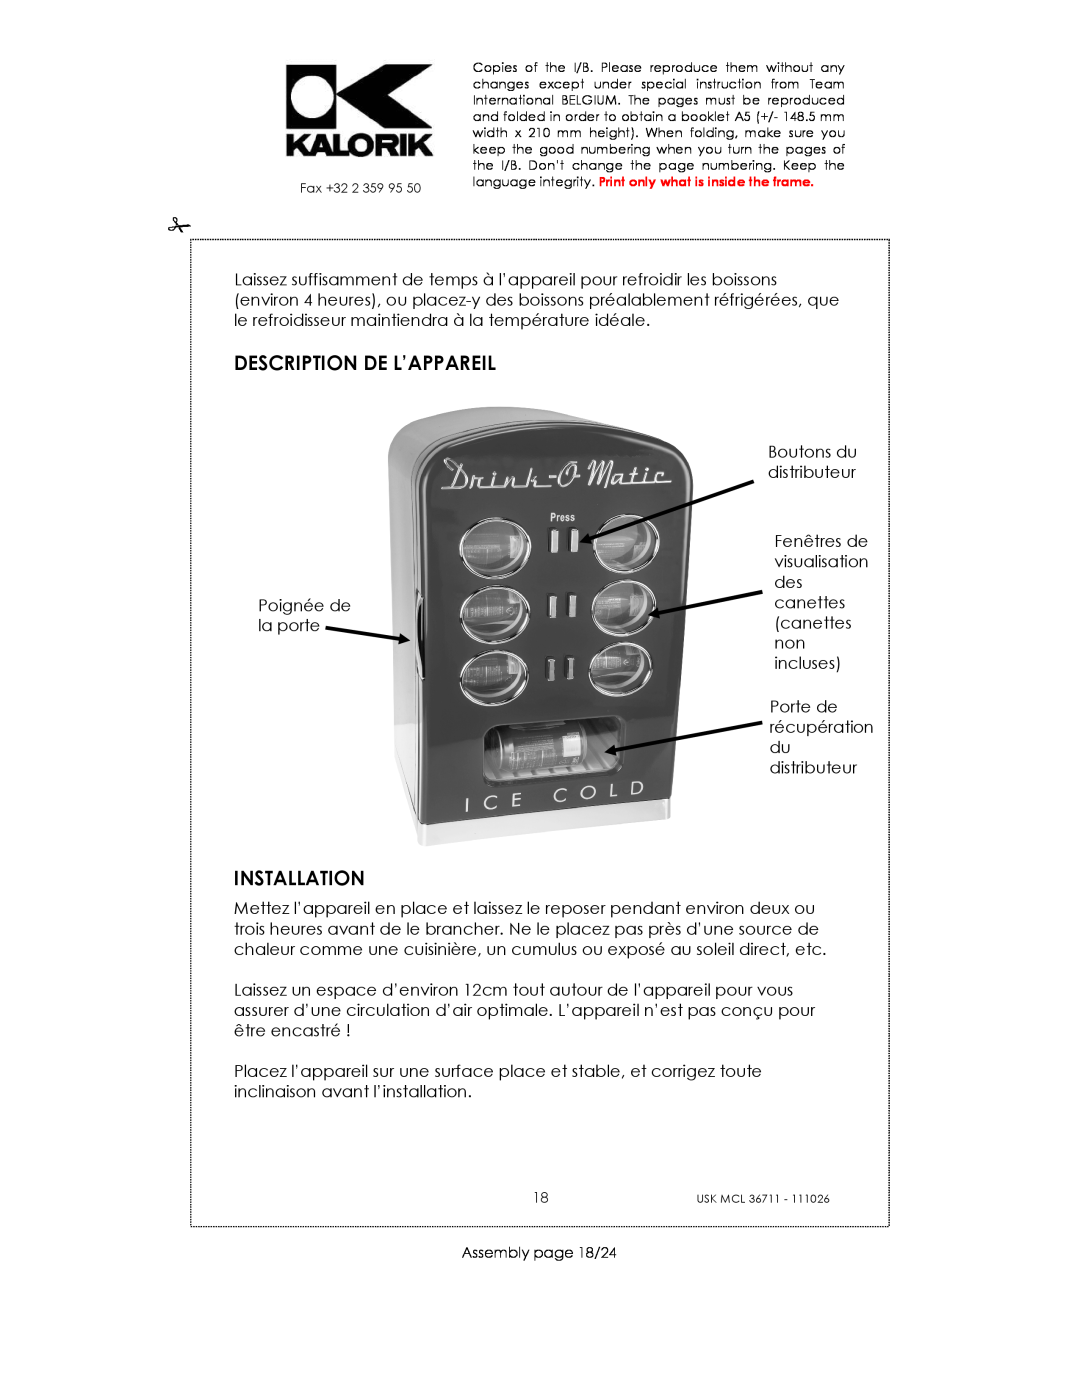 Kalorik USK MCL 36711 manual Description De L’Appareil, Installation 